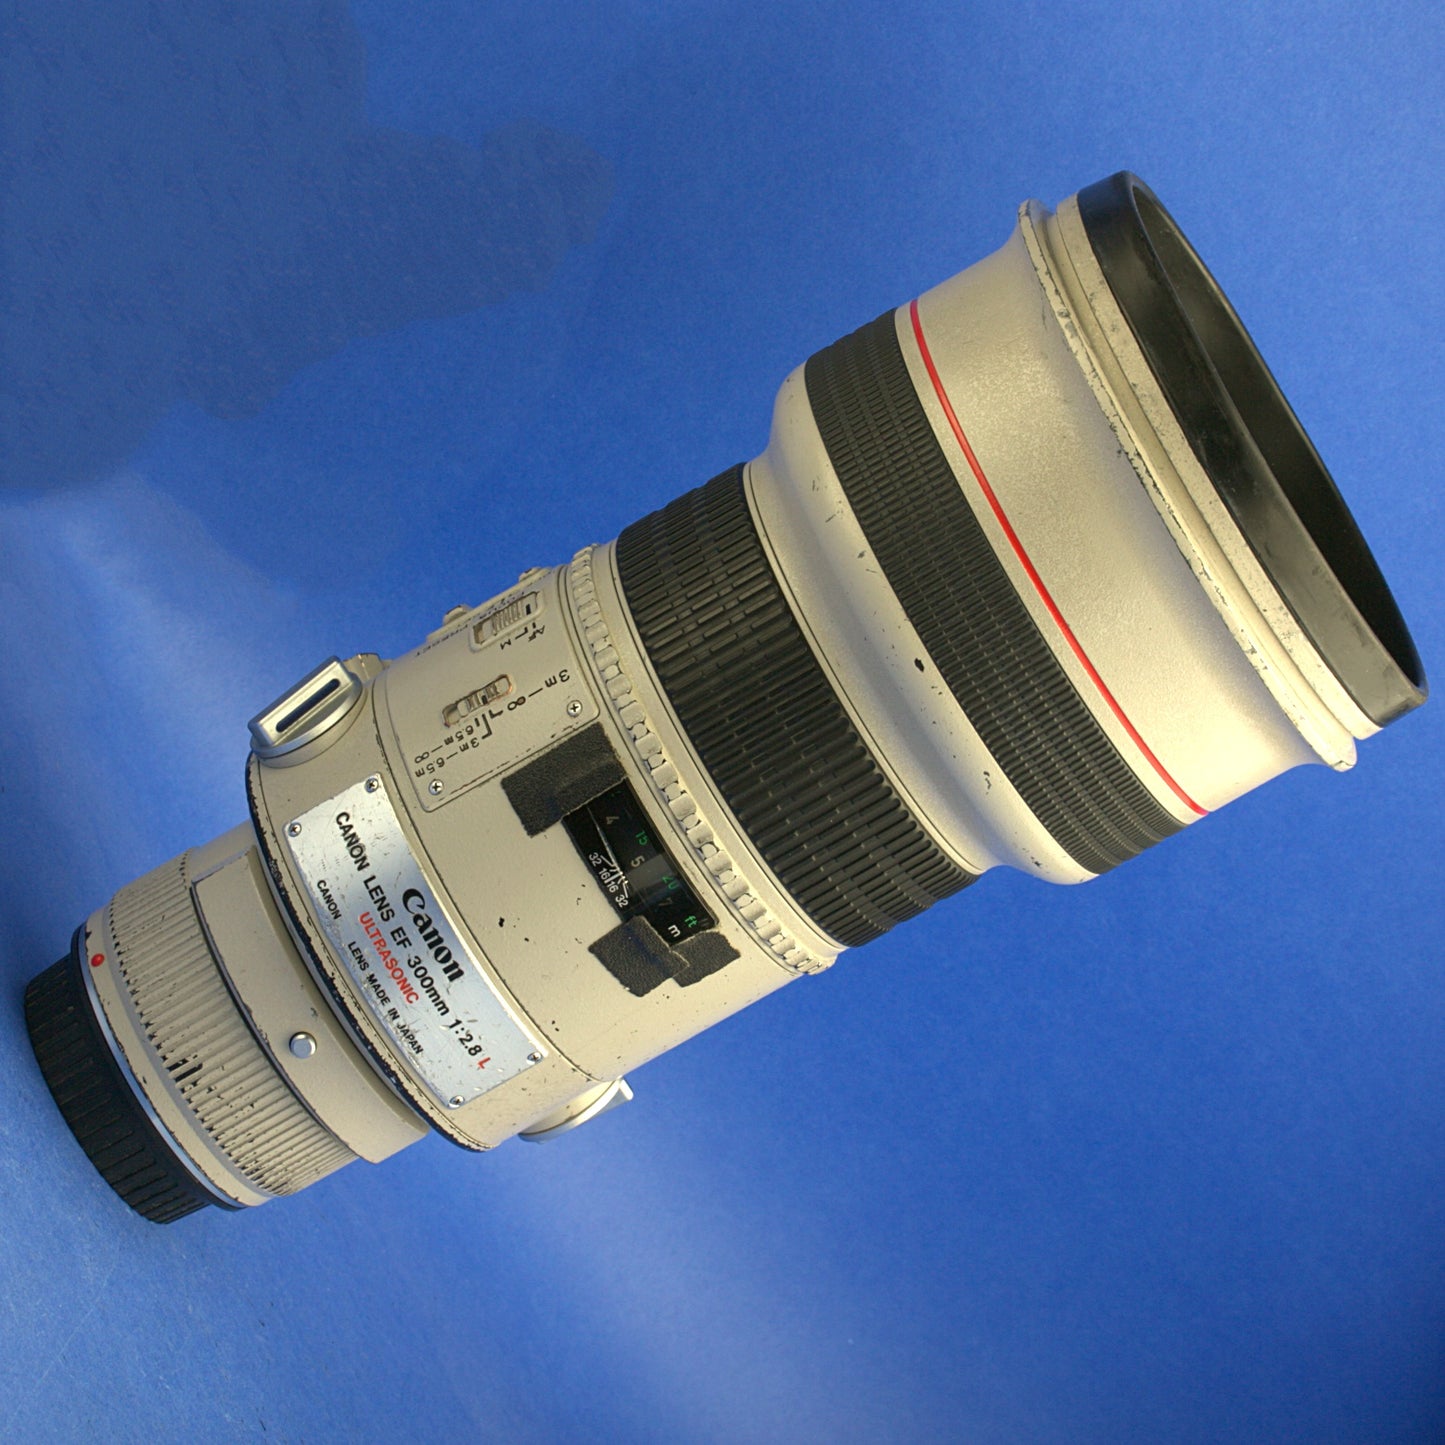 Canon EF 300mm 2.8 L Lens